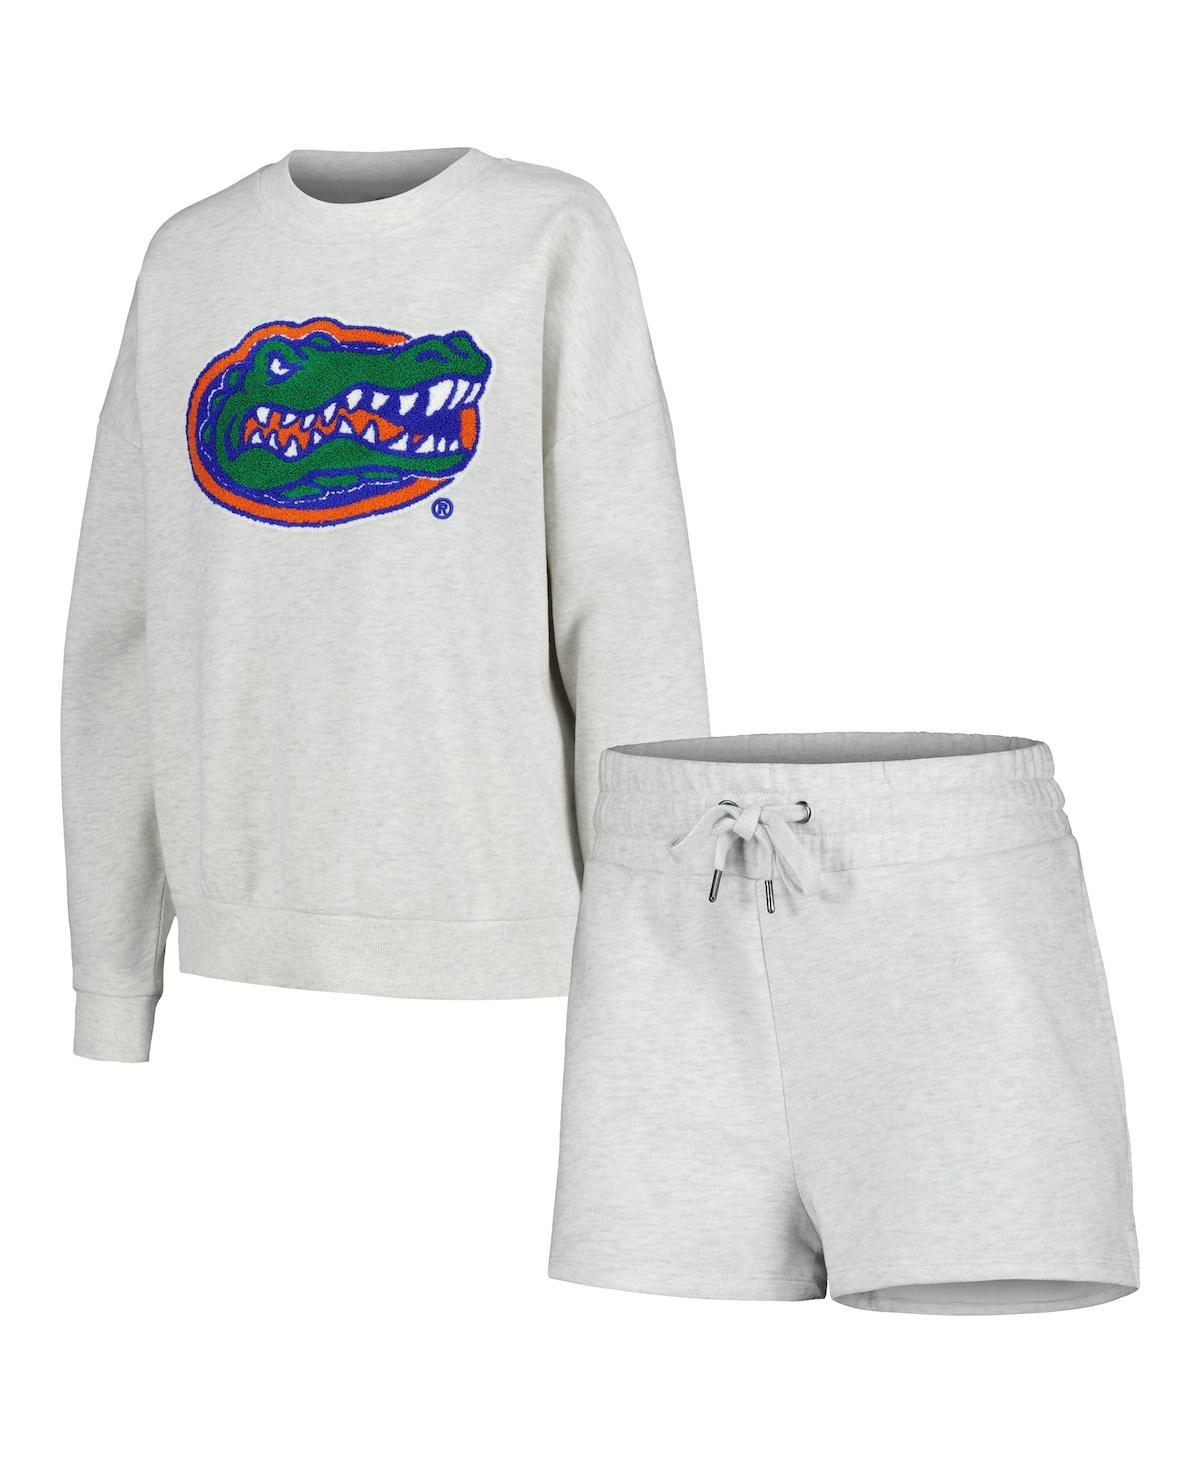 Women's Gameday Couture Ash Florida Gators Team Effort Pullover Sweatshirt and Shorts Sleep Set - Ash